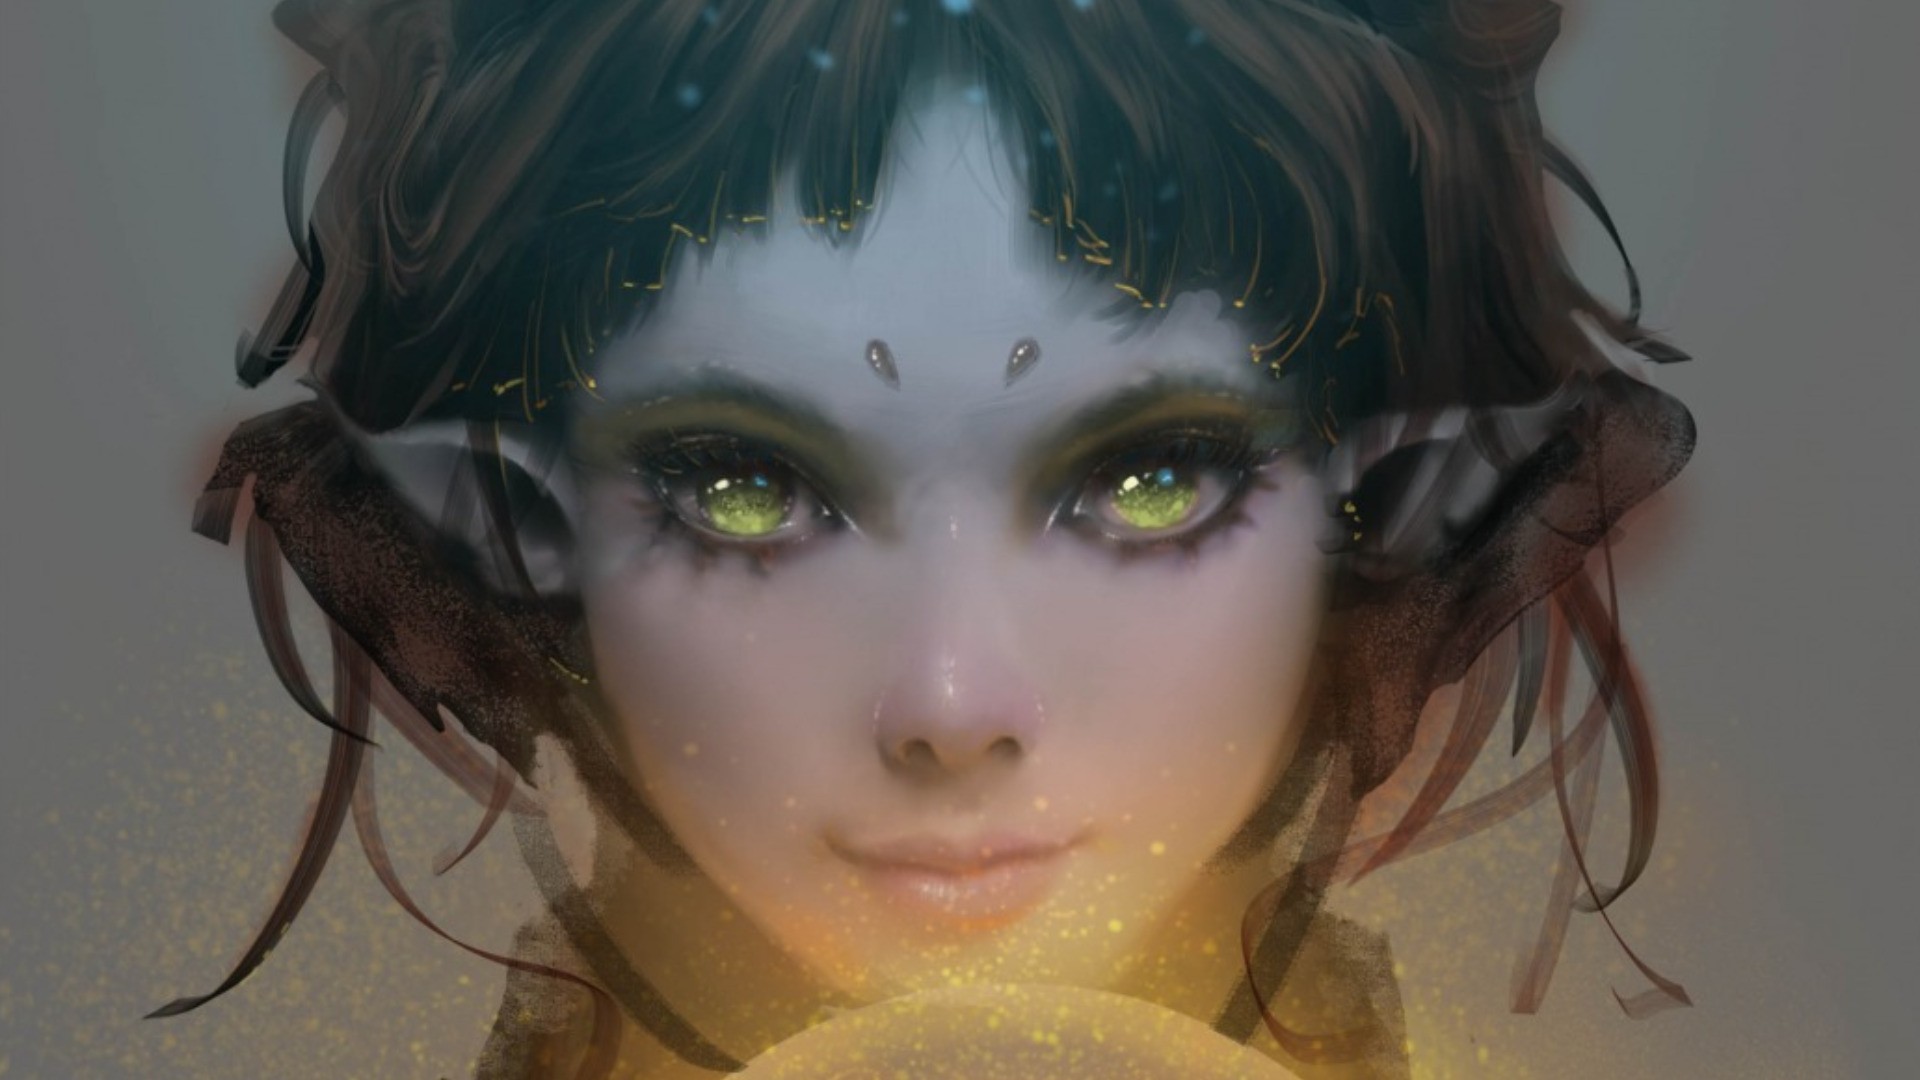 General 1920x1080 fantasy art fantasy girl dark hair green eyes women looking at viewer